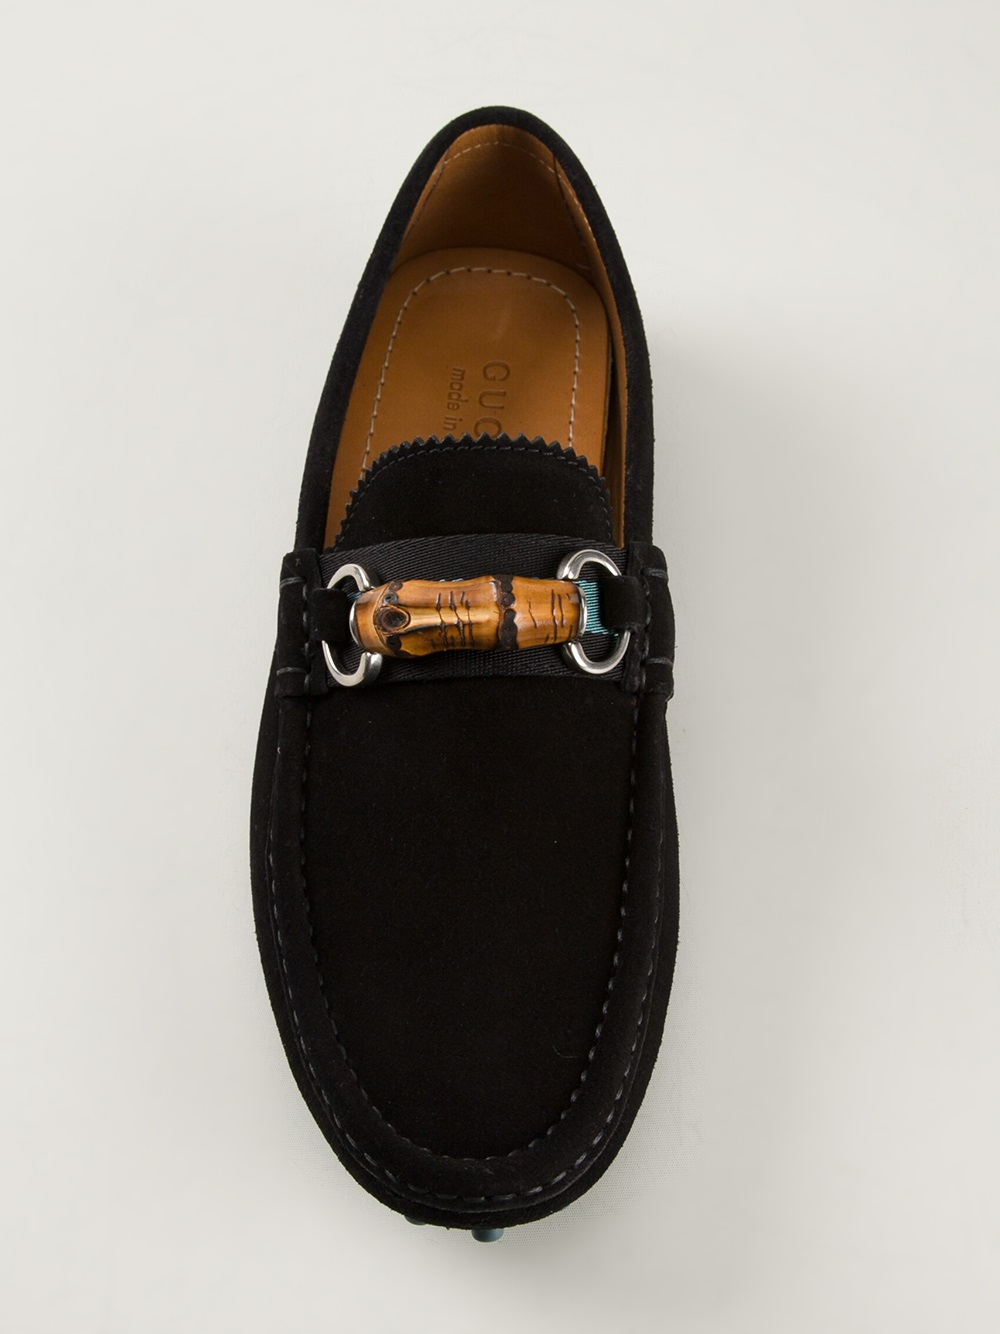 Gucci Horsebit Driver Shoes in Black for Men - Lyst